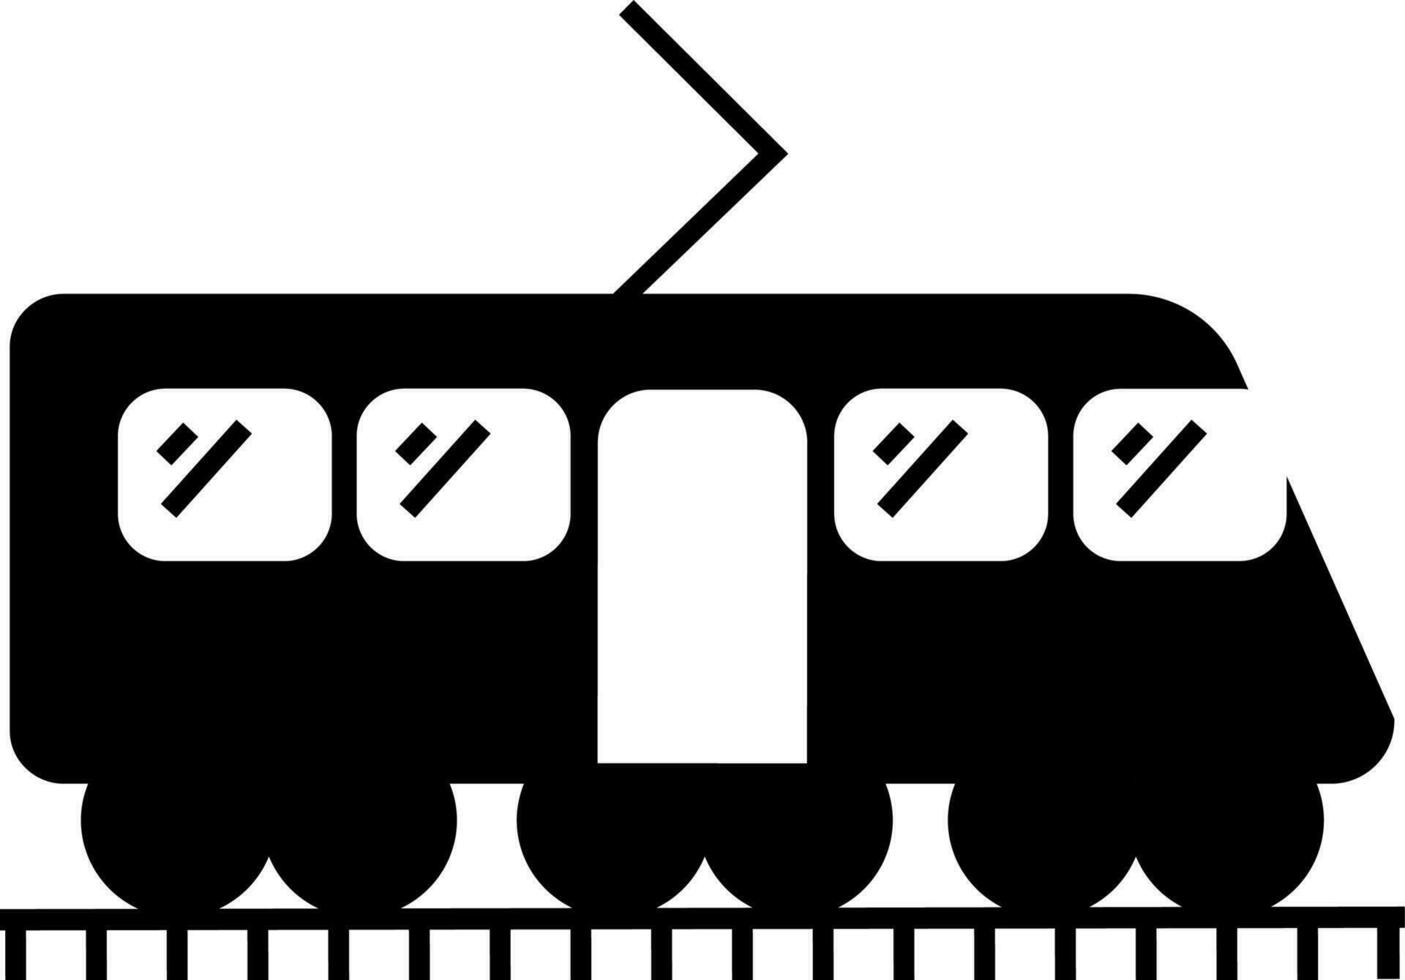 Flat style illustration of train. vector